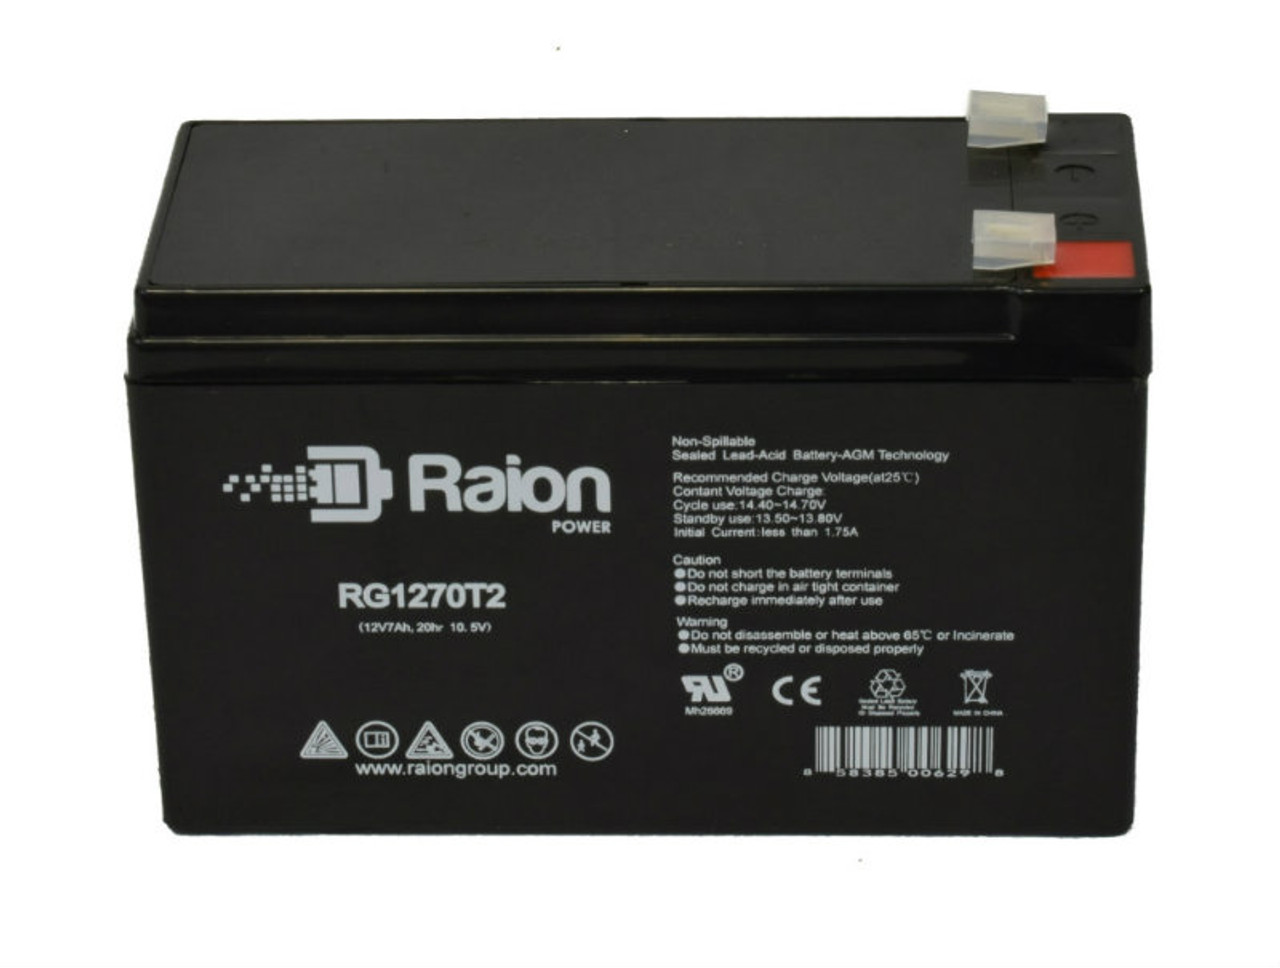 Raion Power RG1270T1 12V 7Ah Lead Acid Battery for Humminbird 343C Portable Fish Finder